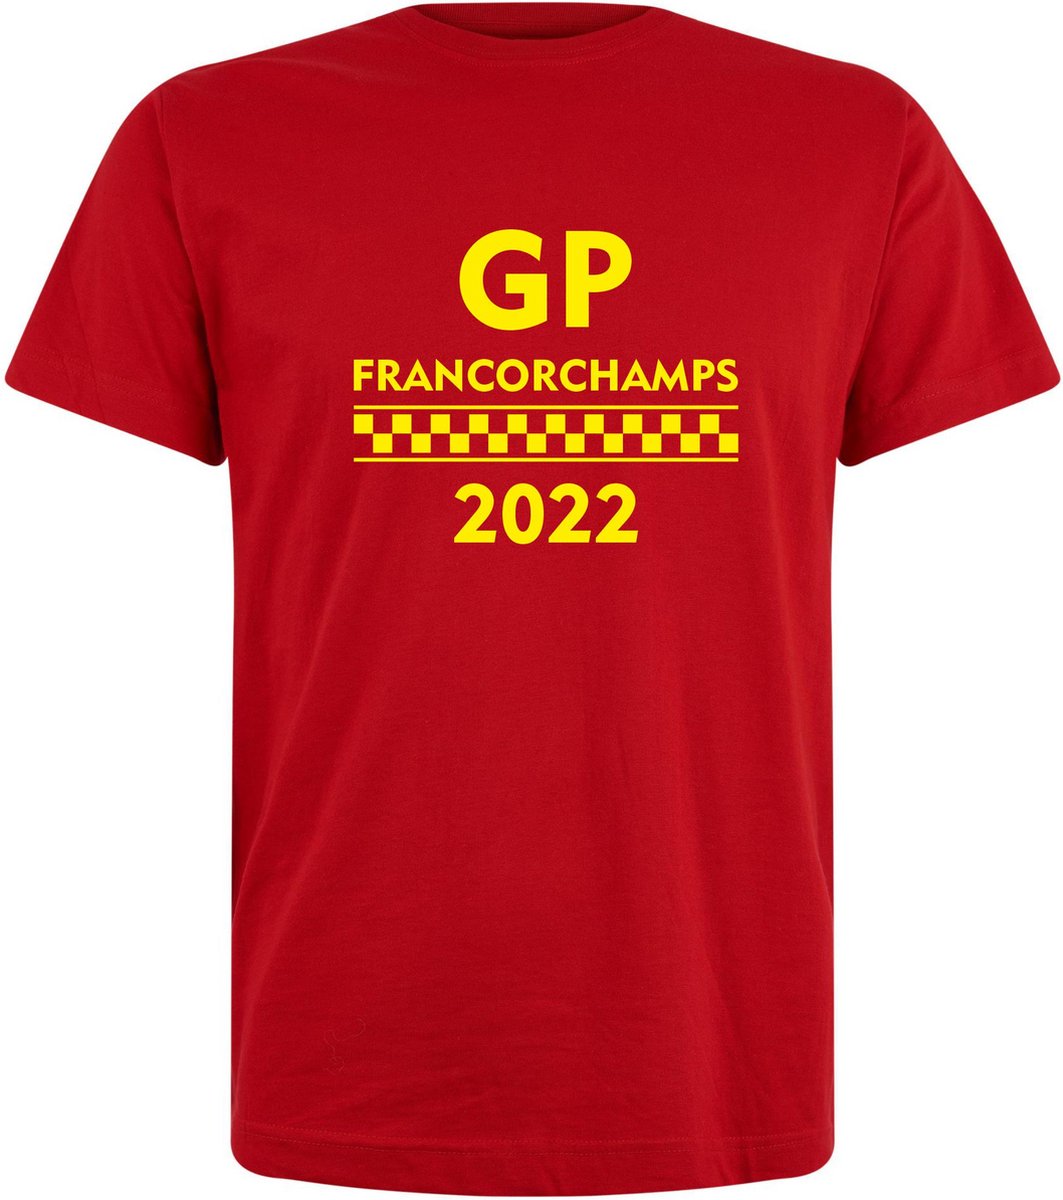 T-shirt kinderen GP Francorchamps 2022 | Max Verstappen / Red Bull Racing / Formule 1 fan | Grand Prix Circuit Spa-Francorchamps | kleding shirt | Rood | maat 68